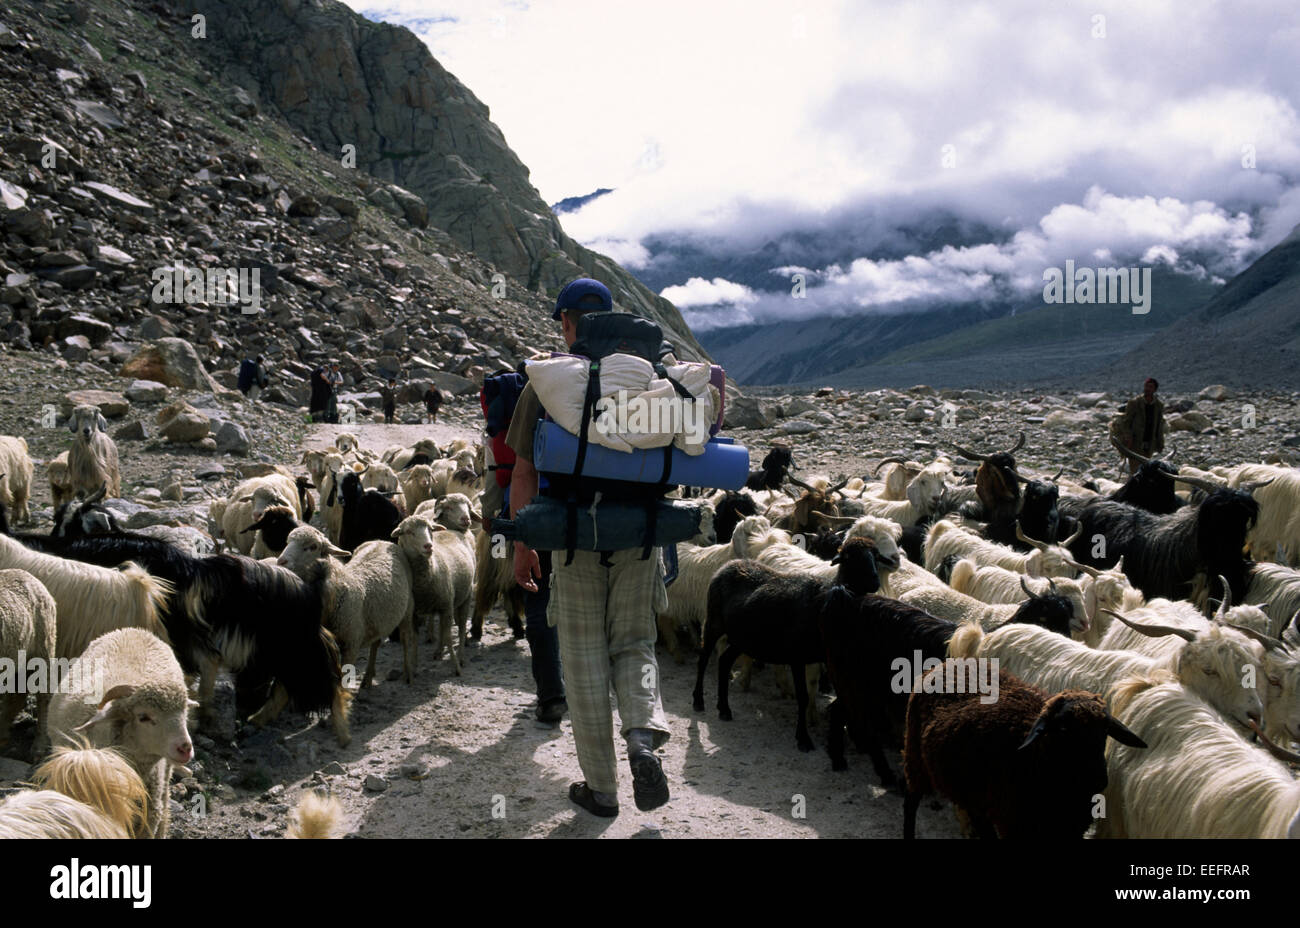 India, Himachal Pradesh, Lahaul valley, sheep flock and people trekking Stock Photo